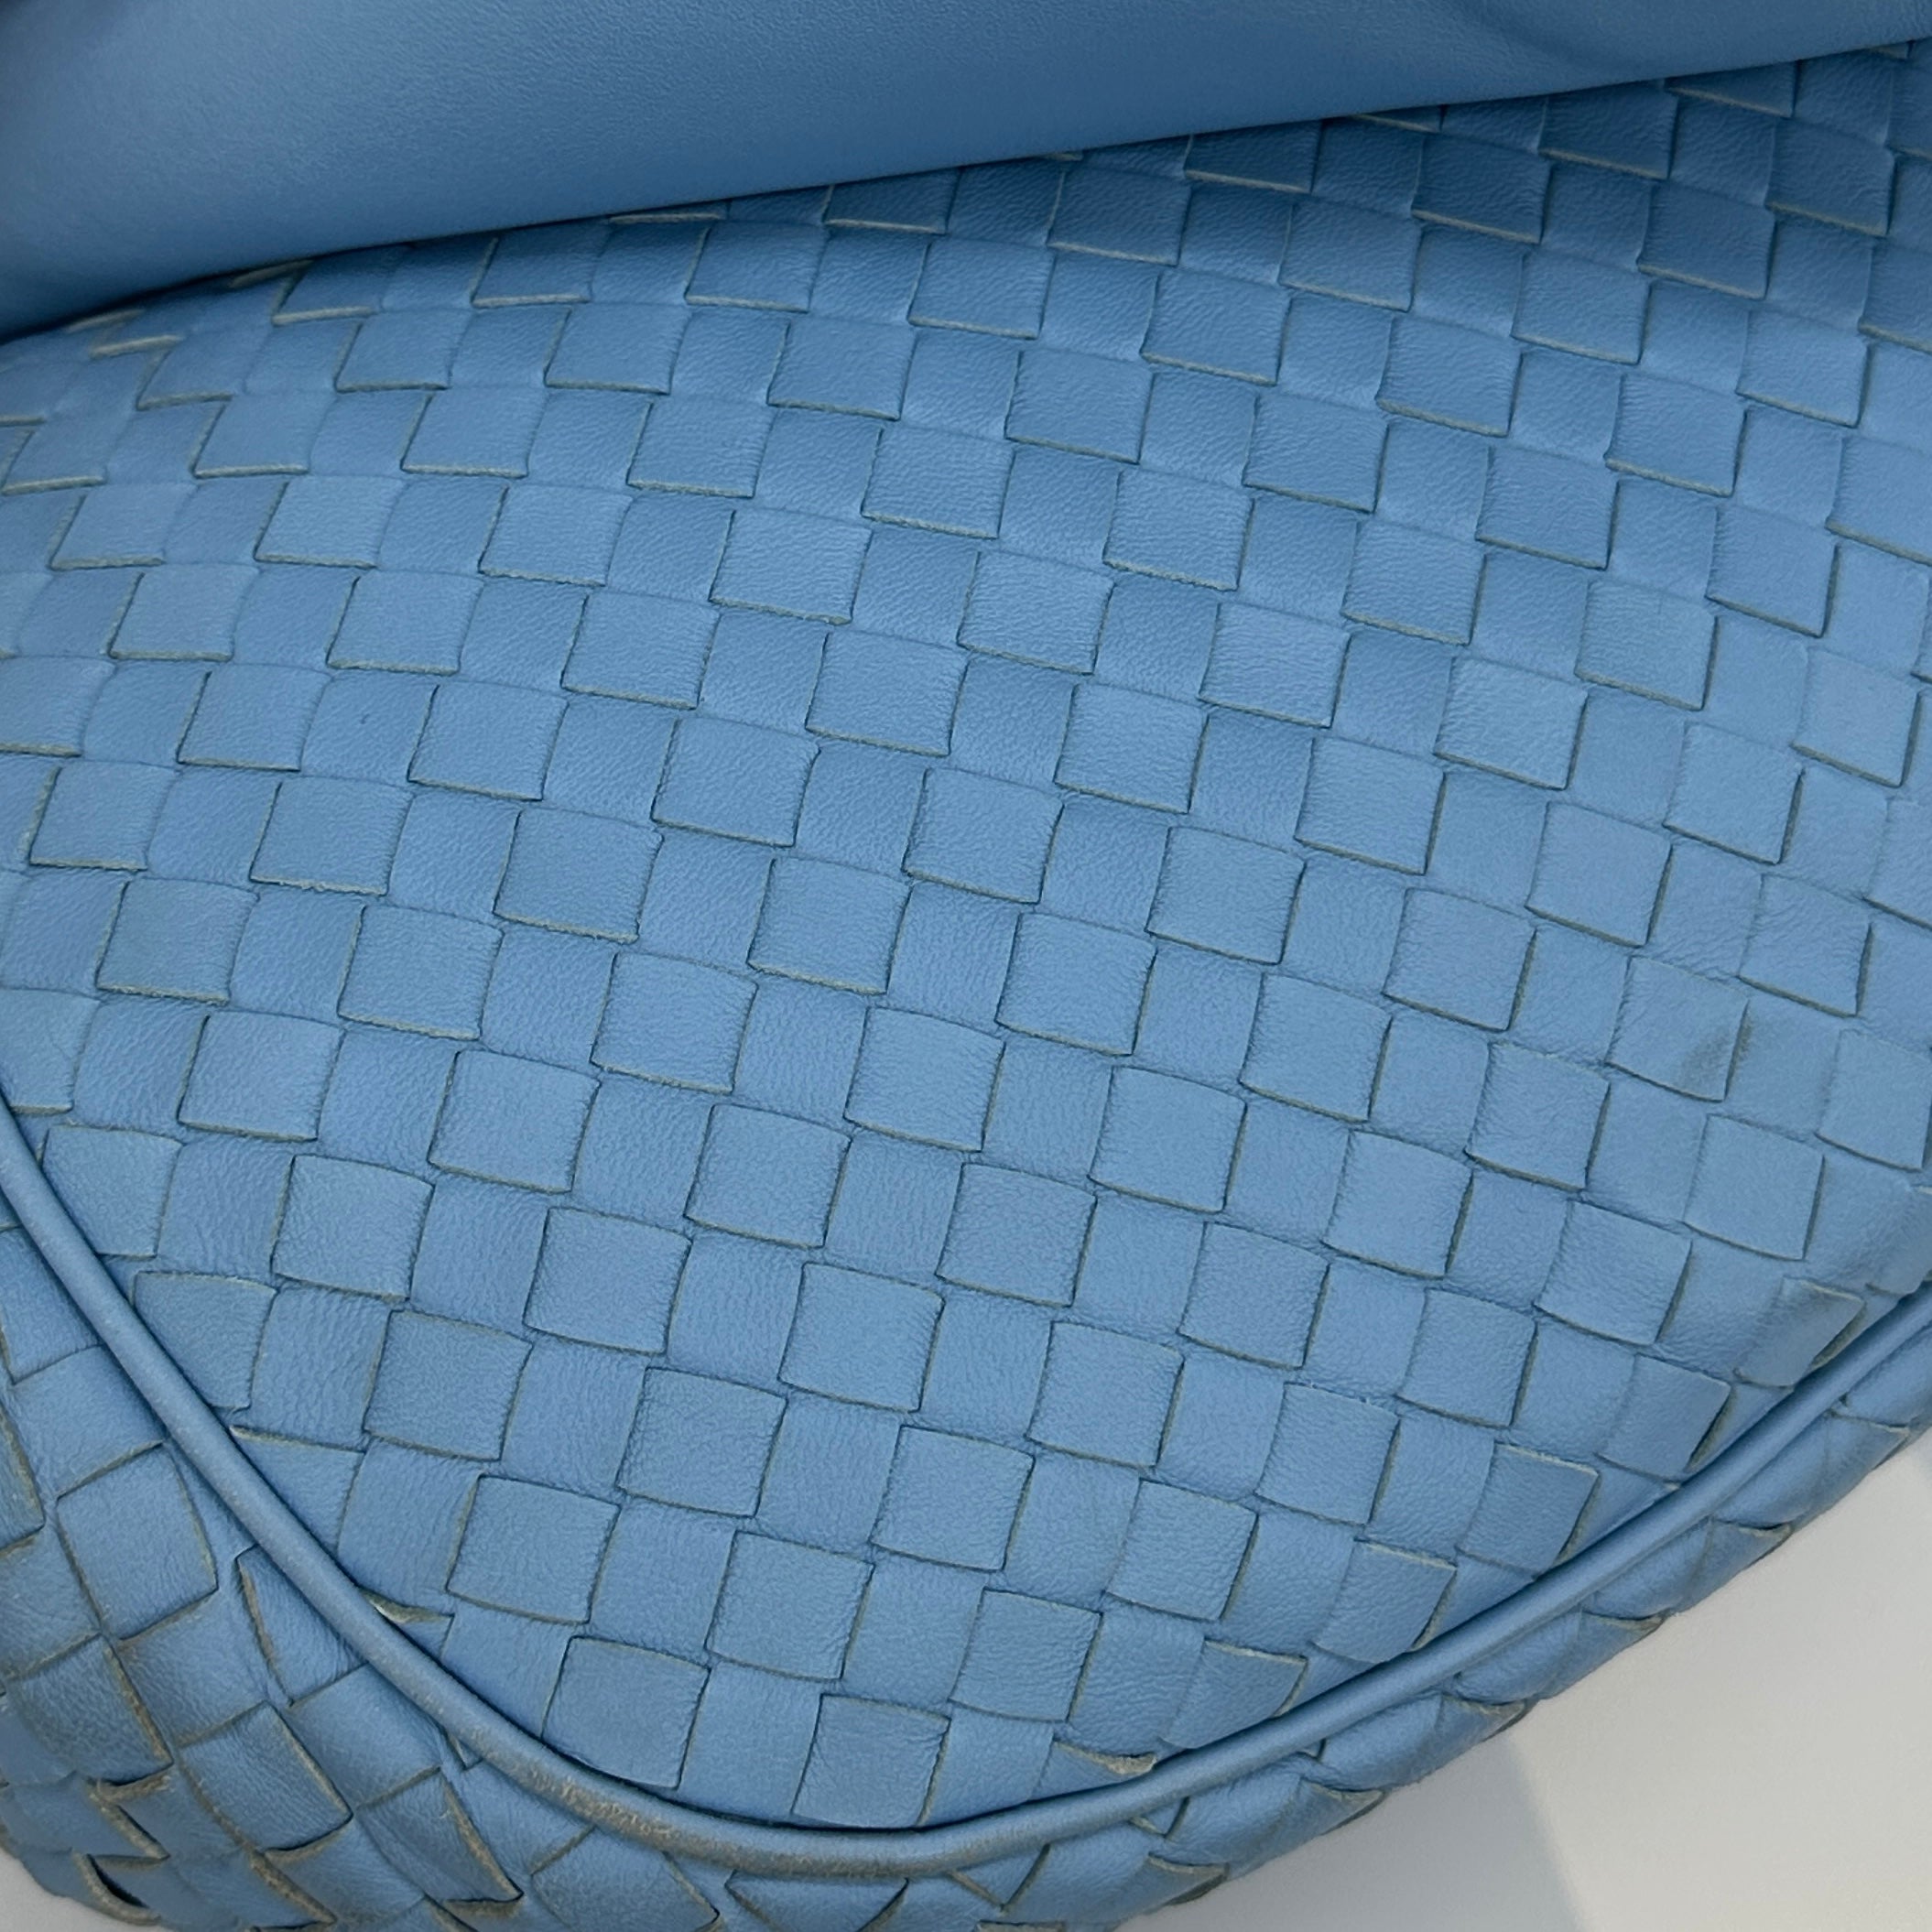 Intrecciato Hobo Flap Crossbody Bag Light Blue - Vintage Luxuries